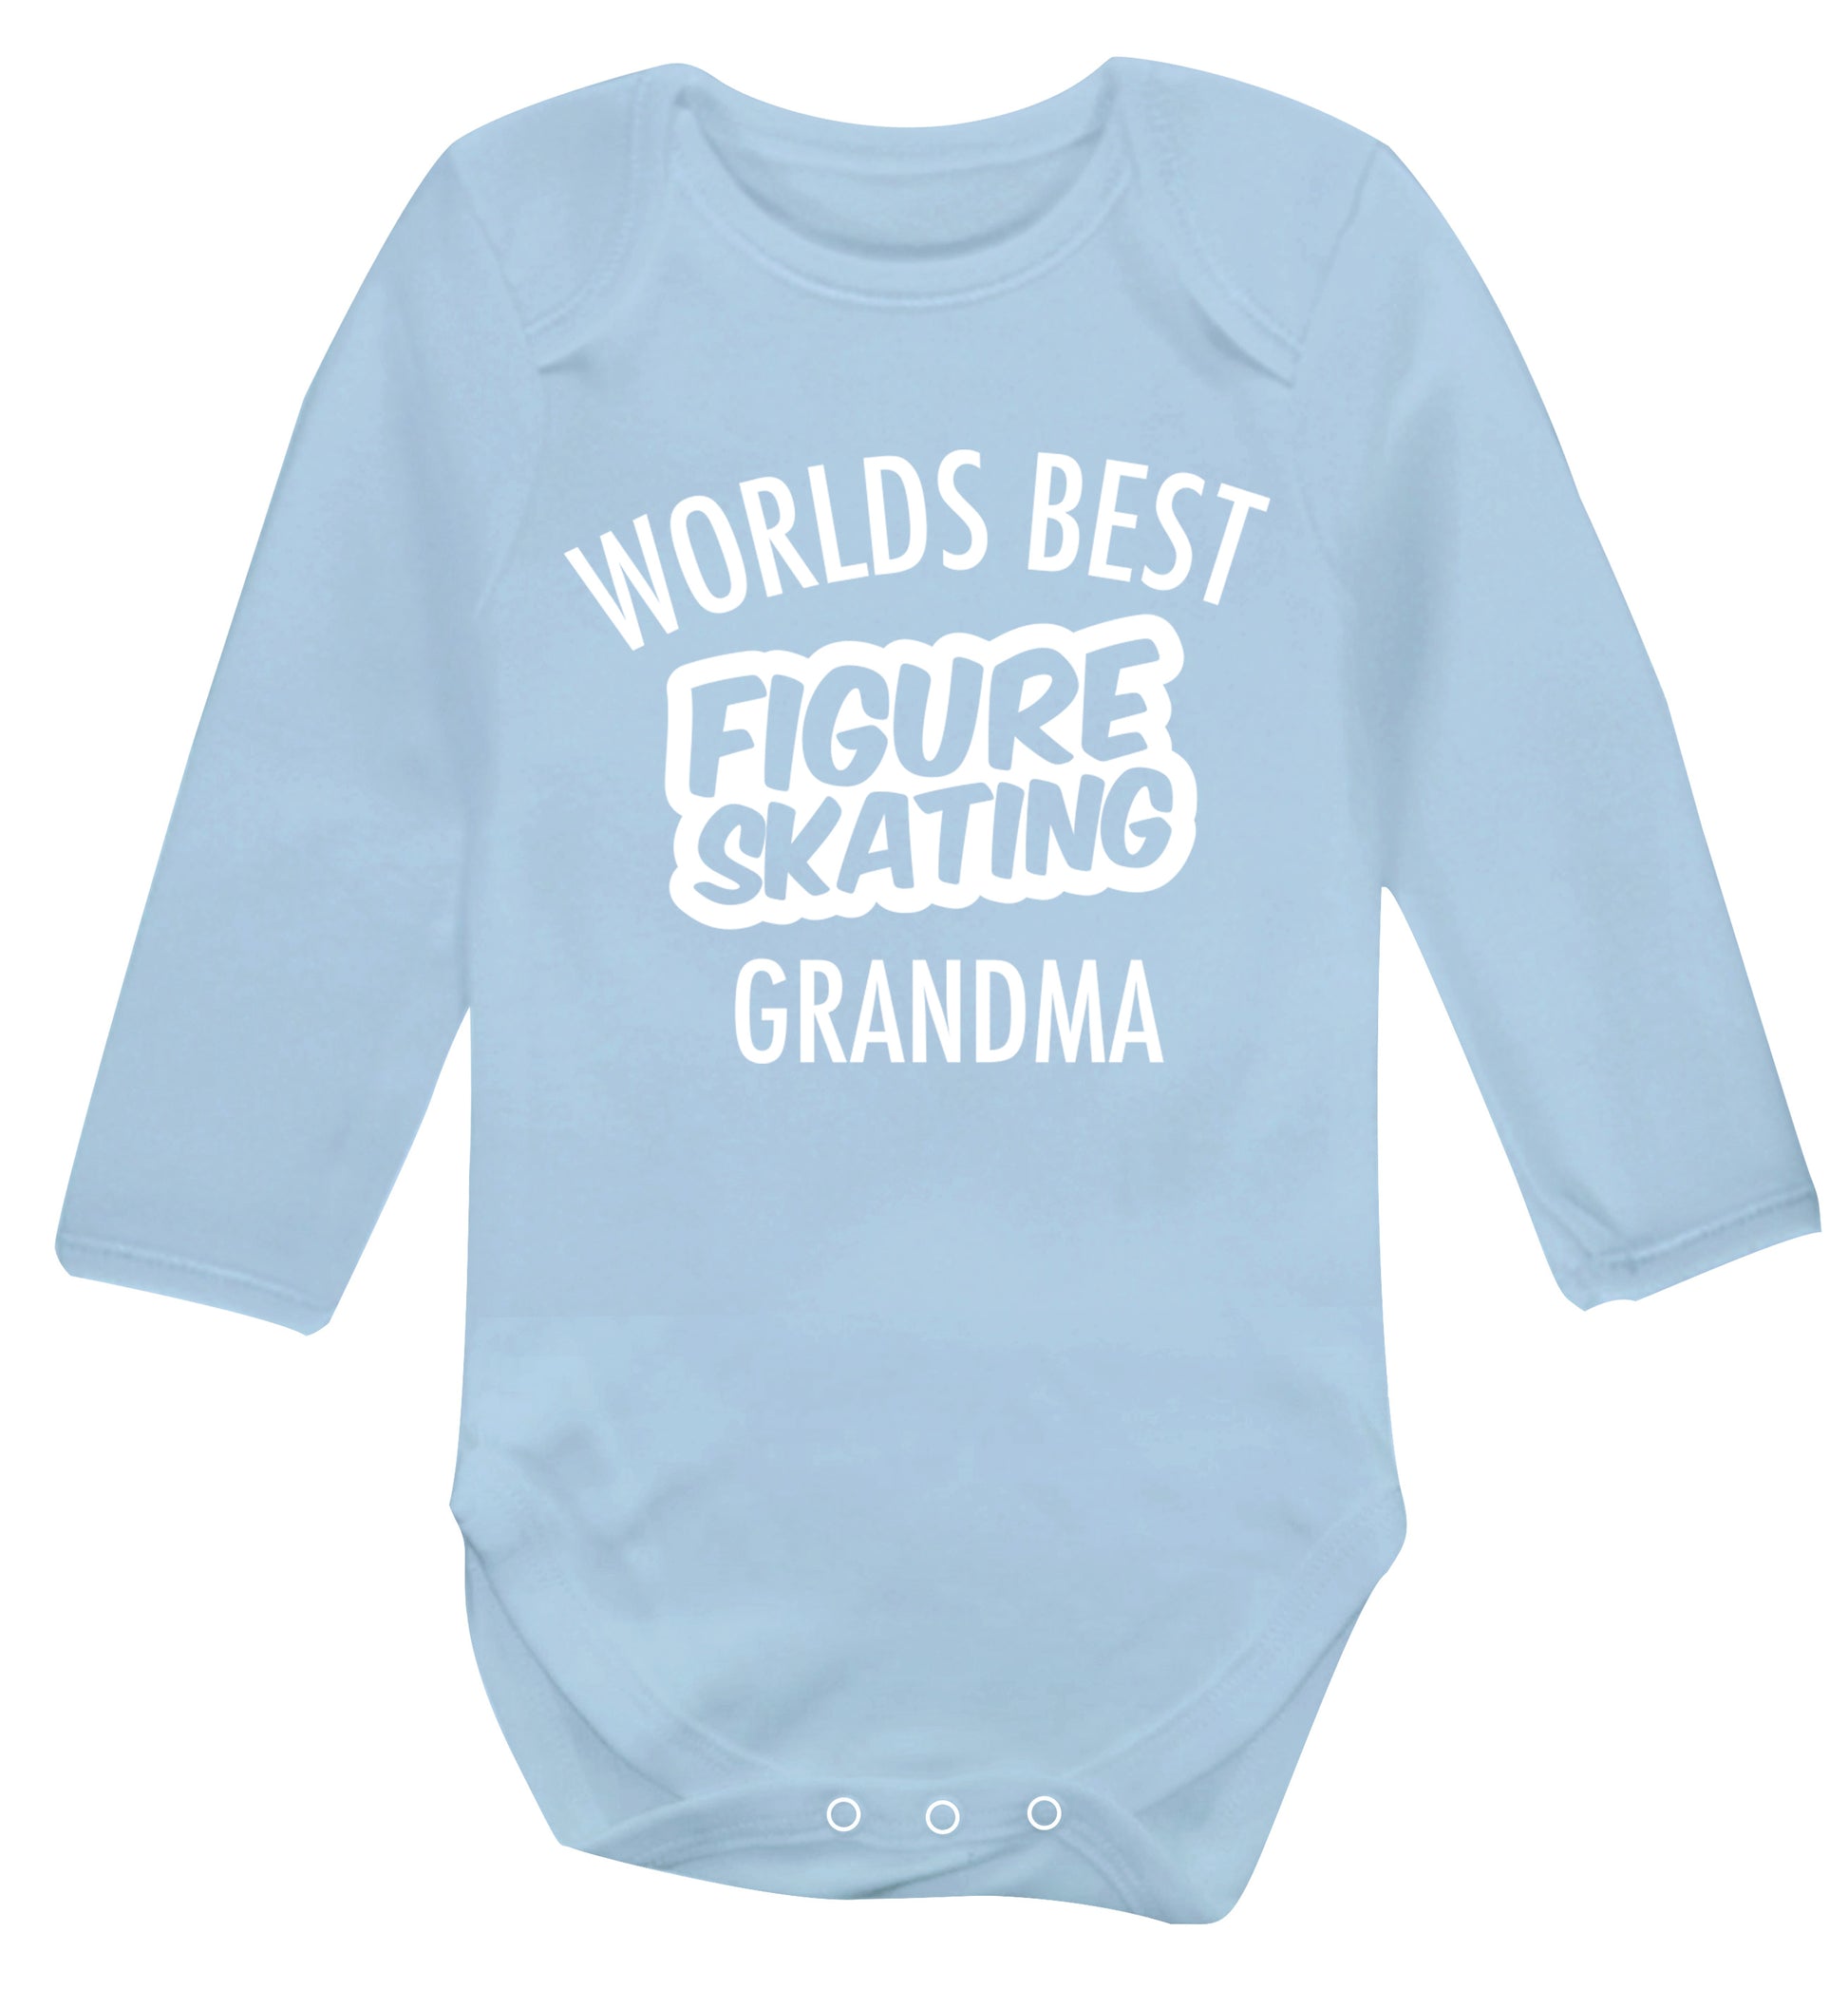 Worlds best figure skating grandma Baby Vest long sleeved pale blue 6-12 months